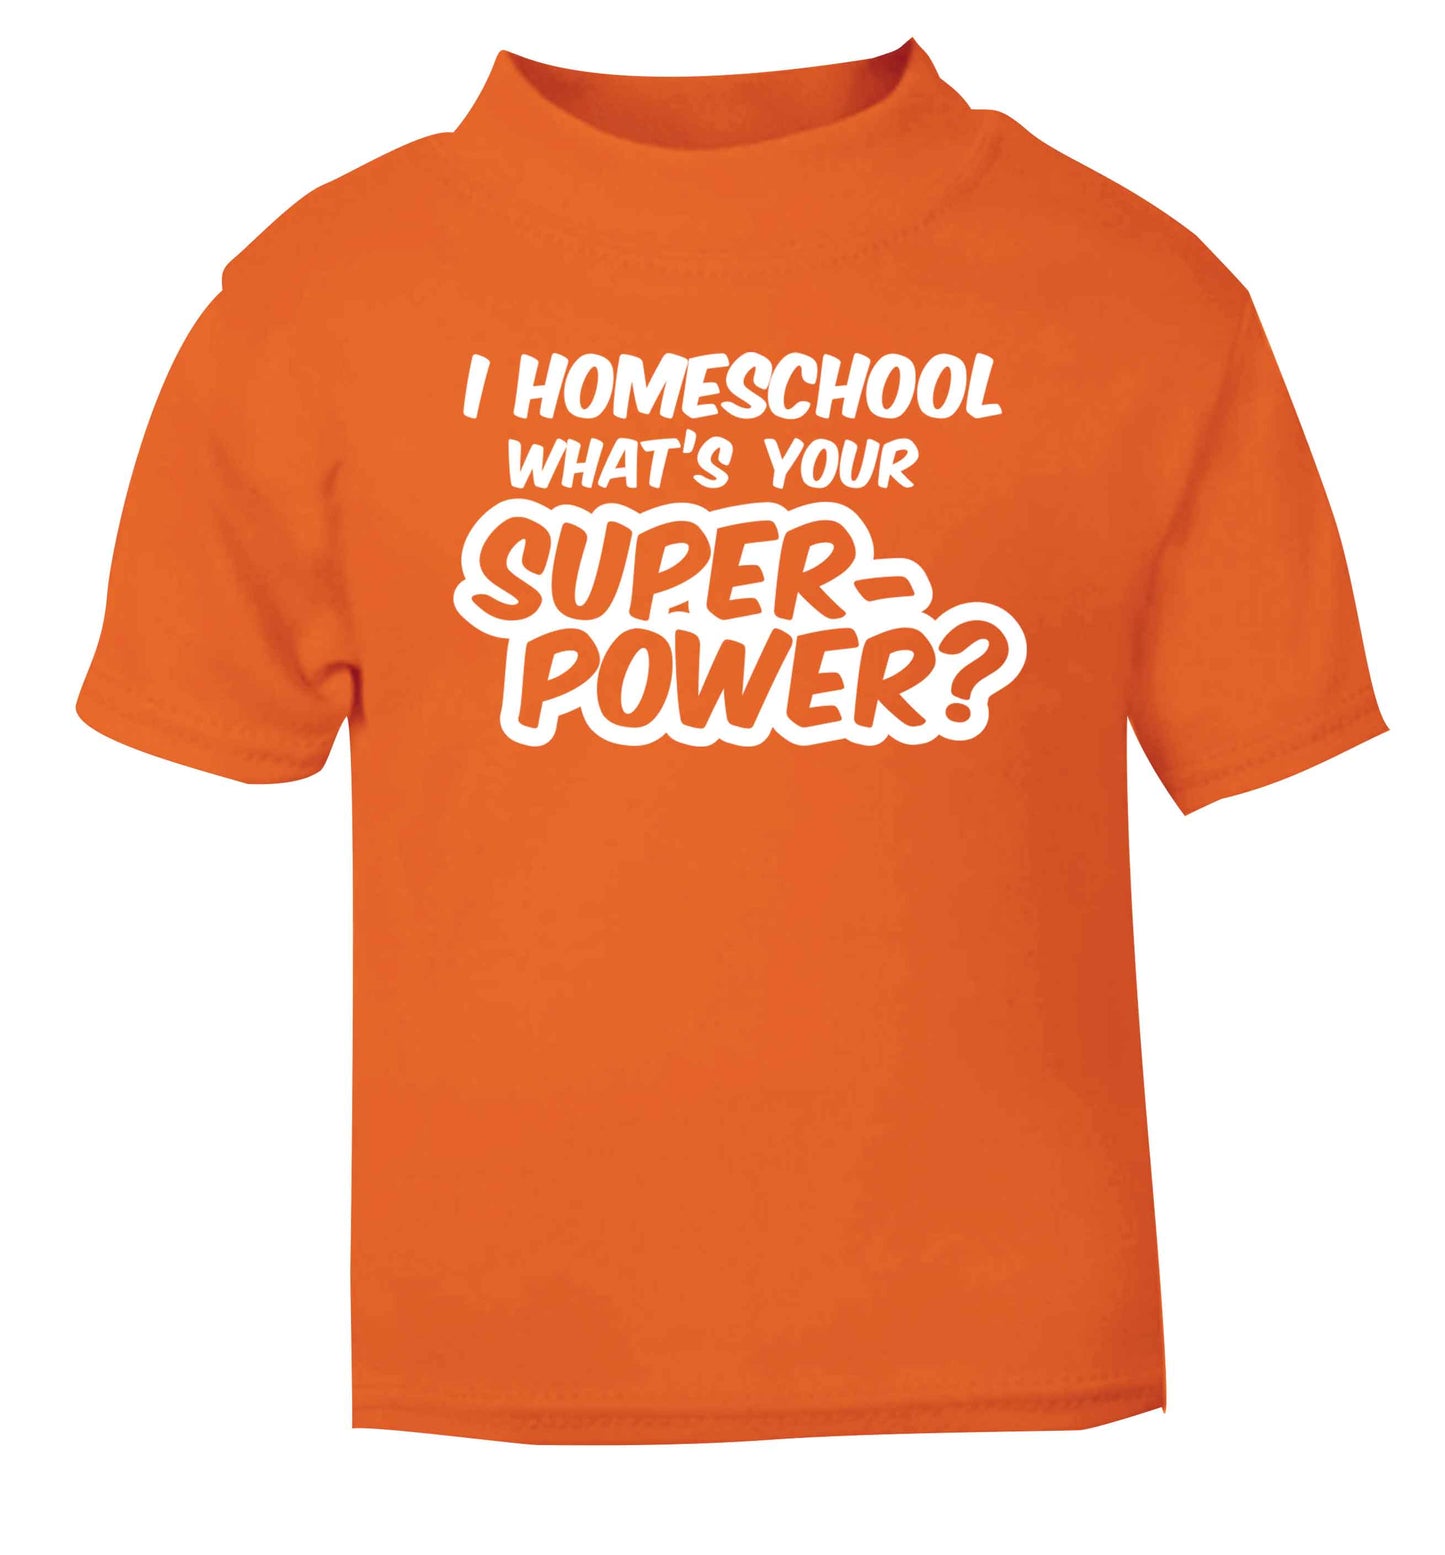 I homeschool what's your superpower? orange Baby Toddler Tshirt 2 Years